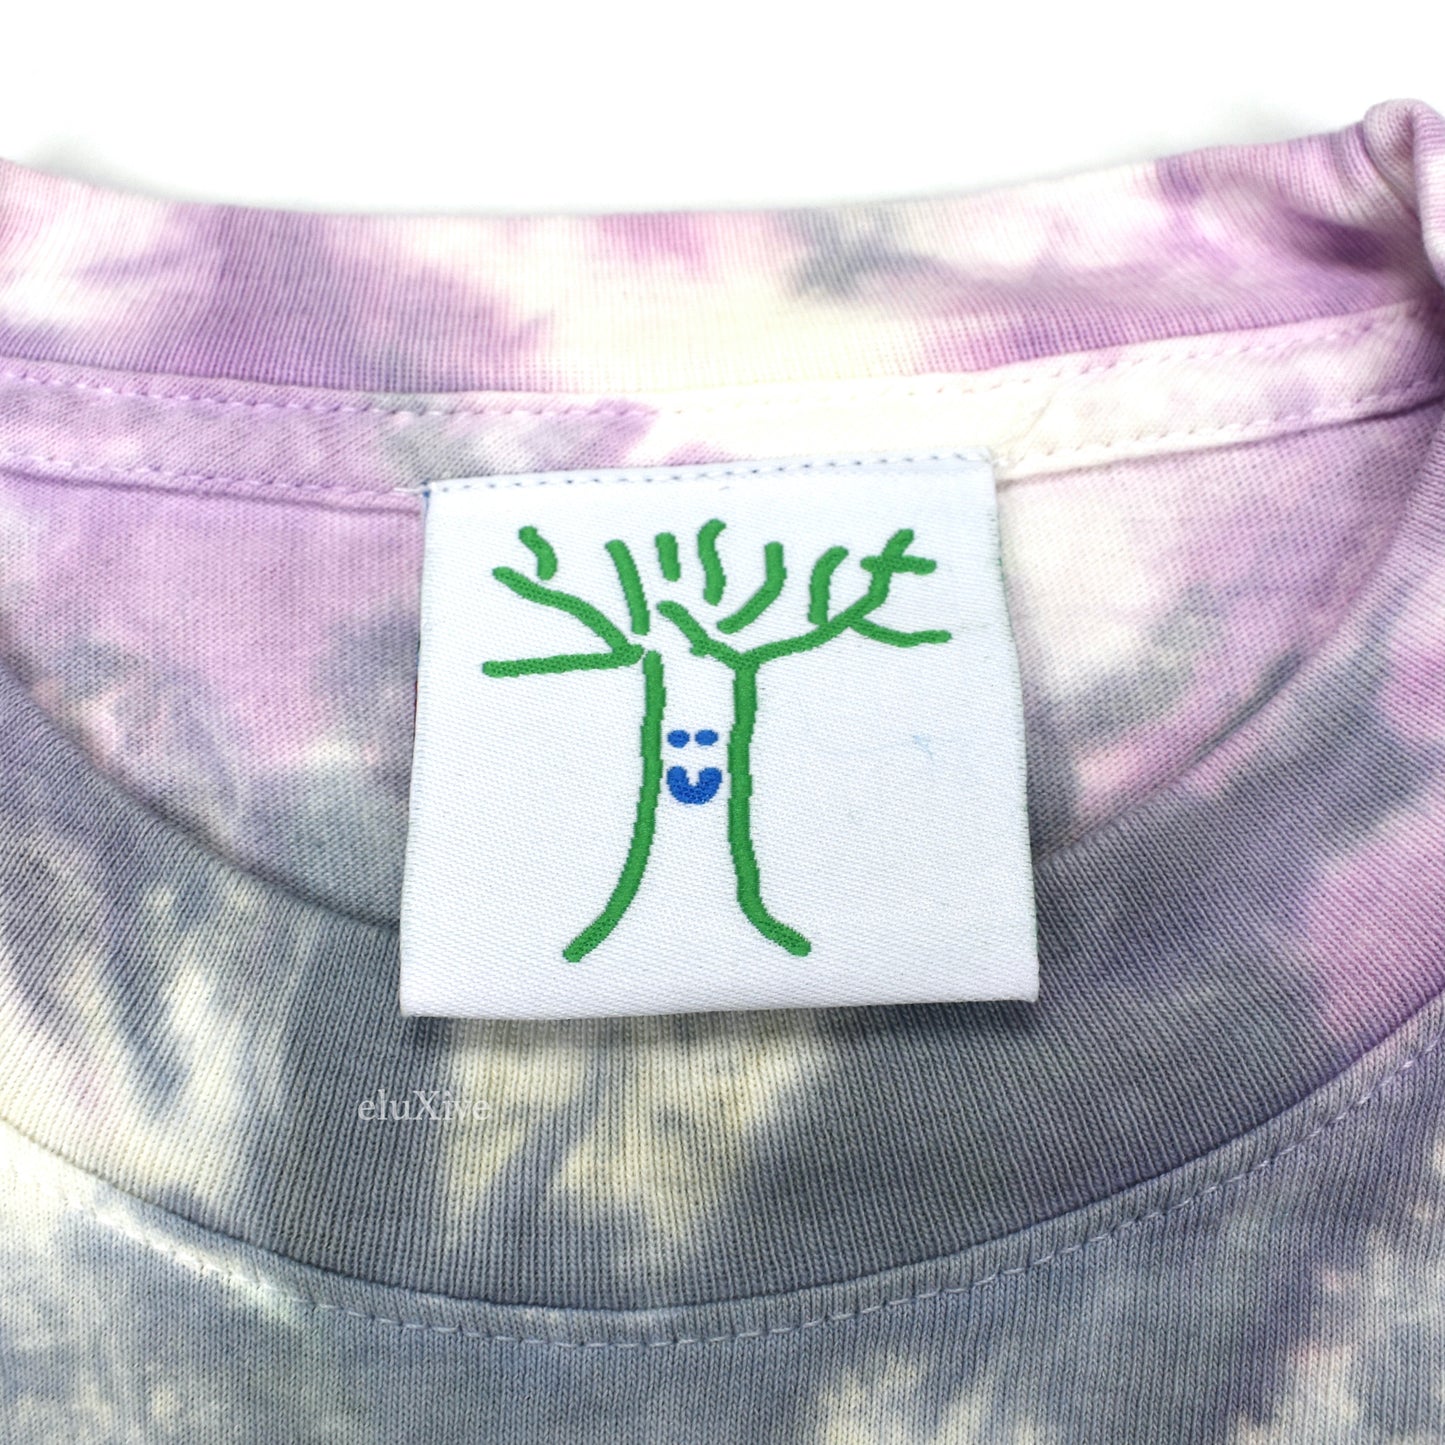 Online Ceramics - Find Heaven Everywhere Tie-Dye T-Shirt (Green/Puprle)